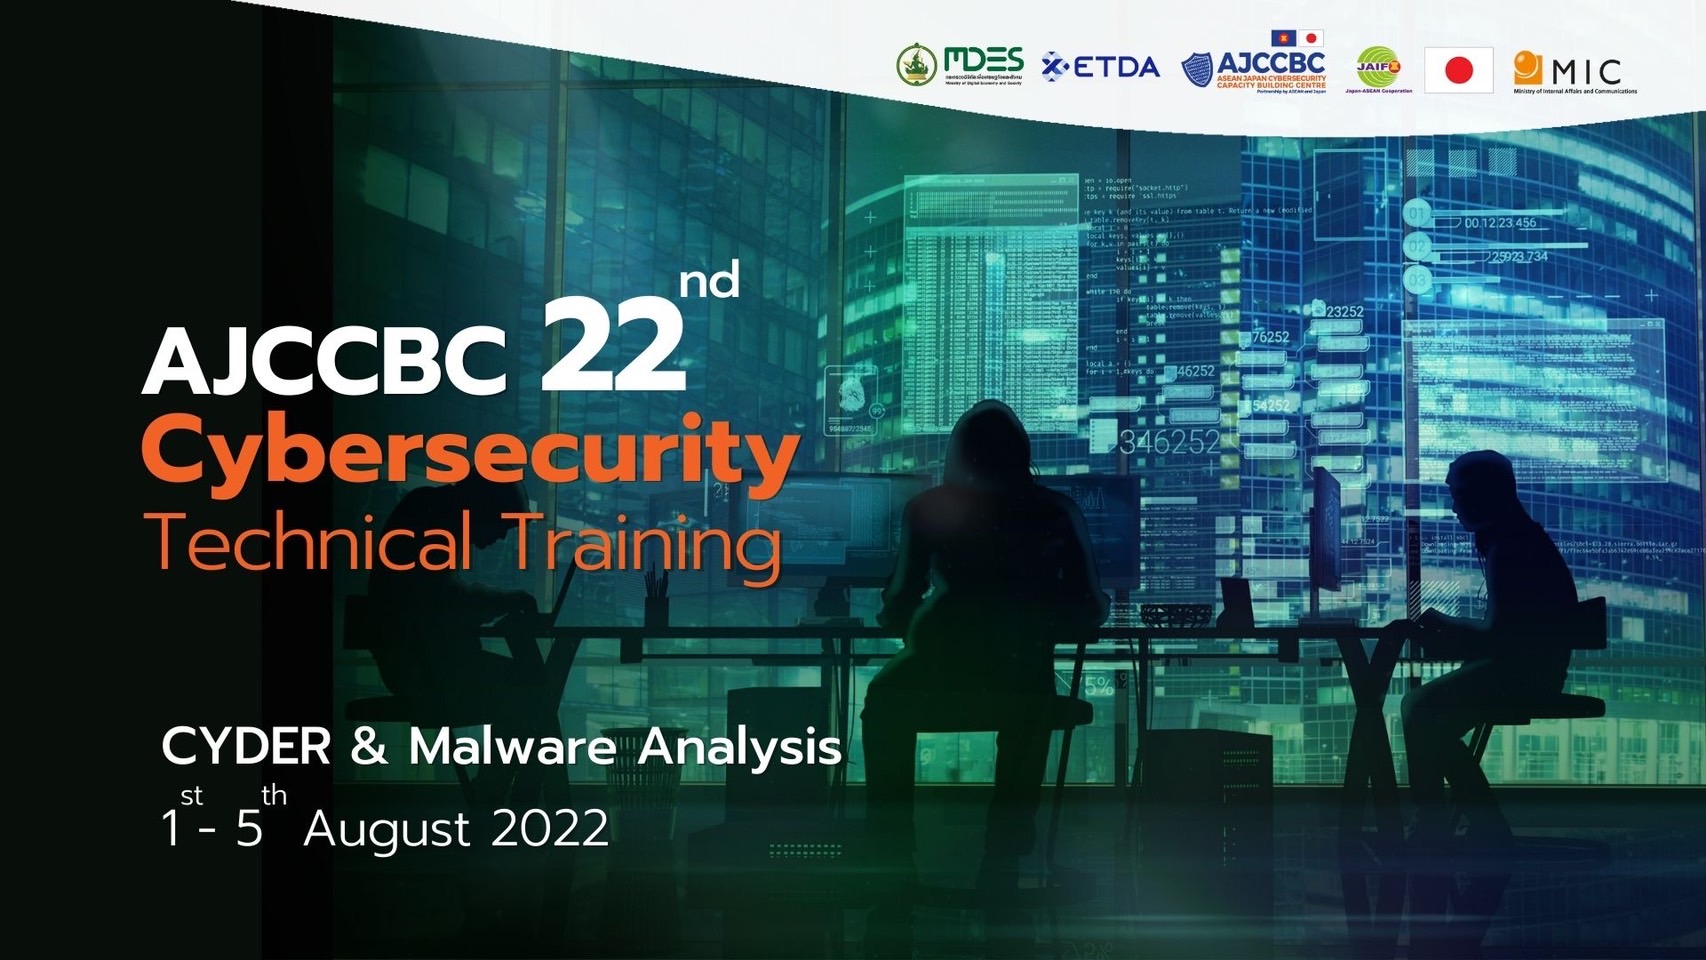 AJCCBC ส่งเสริมบุคลากรด้าน Cybersecurity ประเทศสมาชิกอาเซียน เพื่อยกระดับการเป็นผู้เชี่ยวชาญ ด้านควา